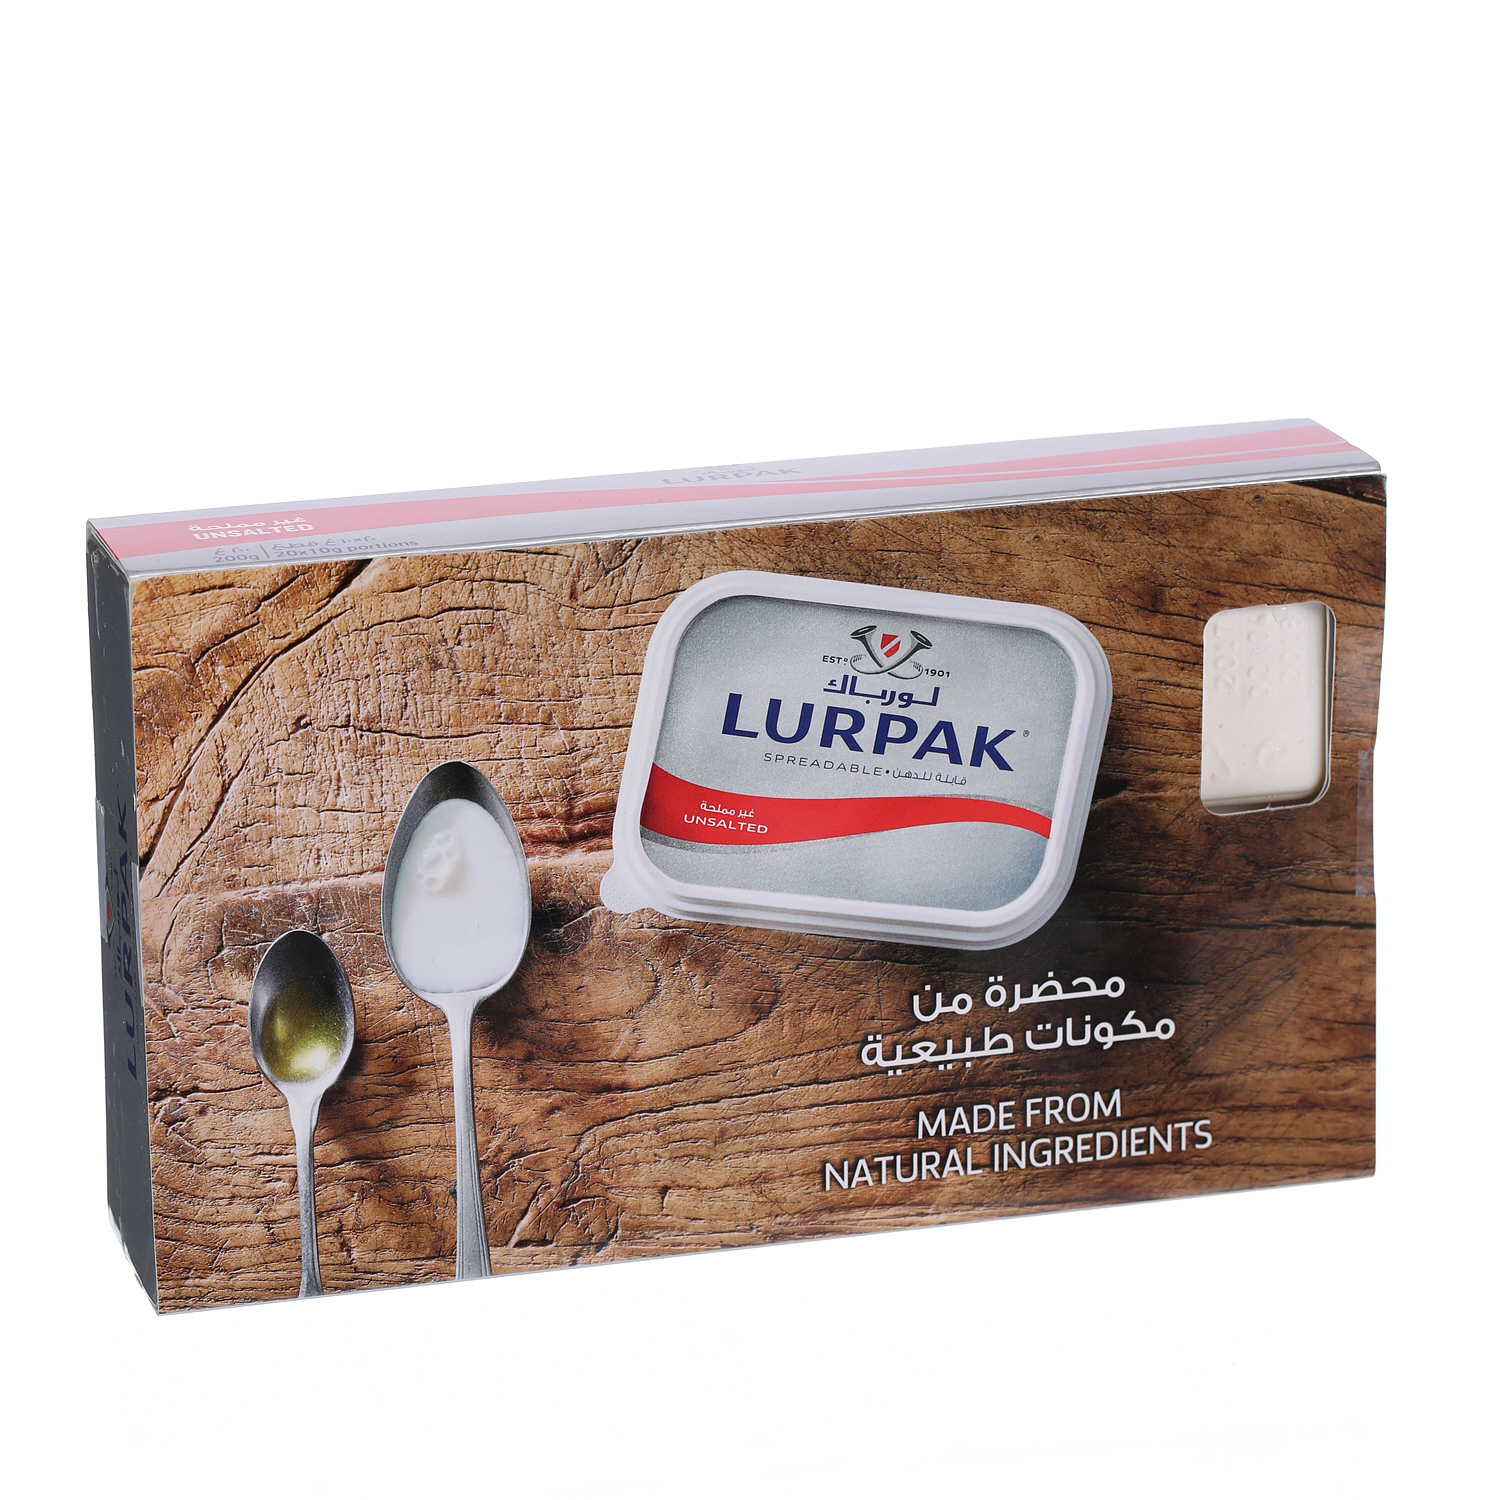 Lurpak Butter Spreadable Unsalted 10 g × 20 Pack